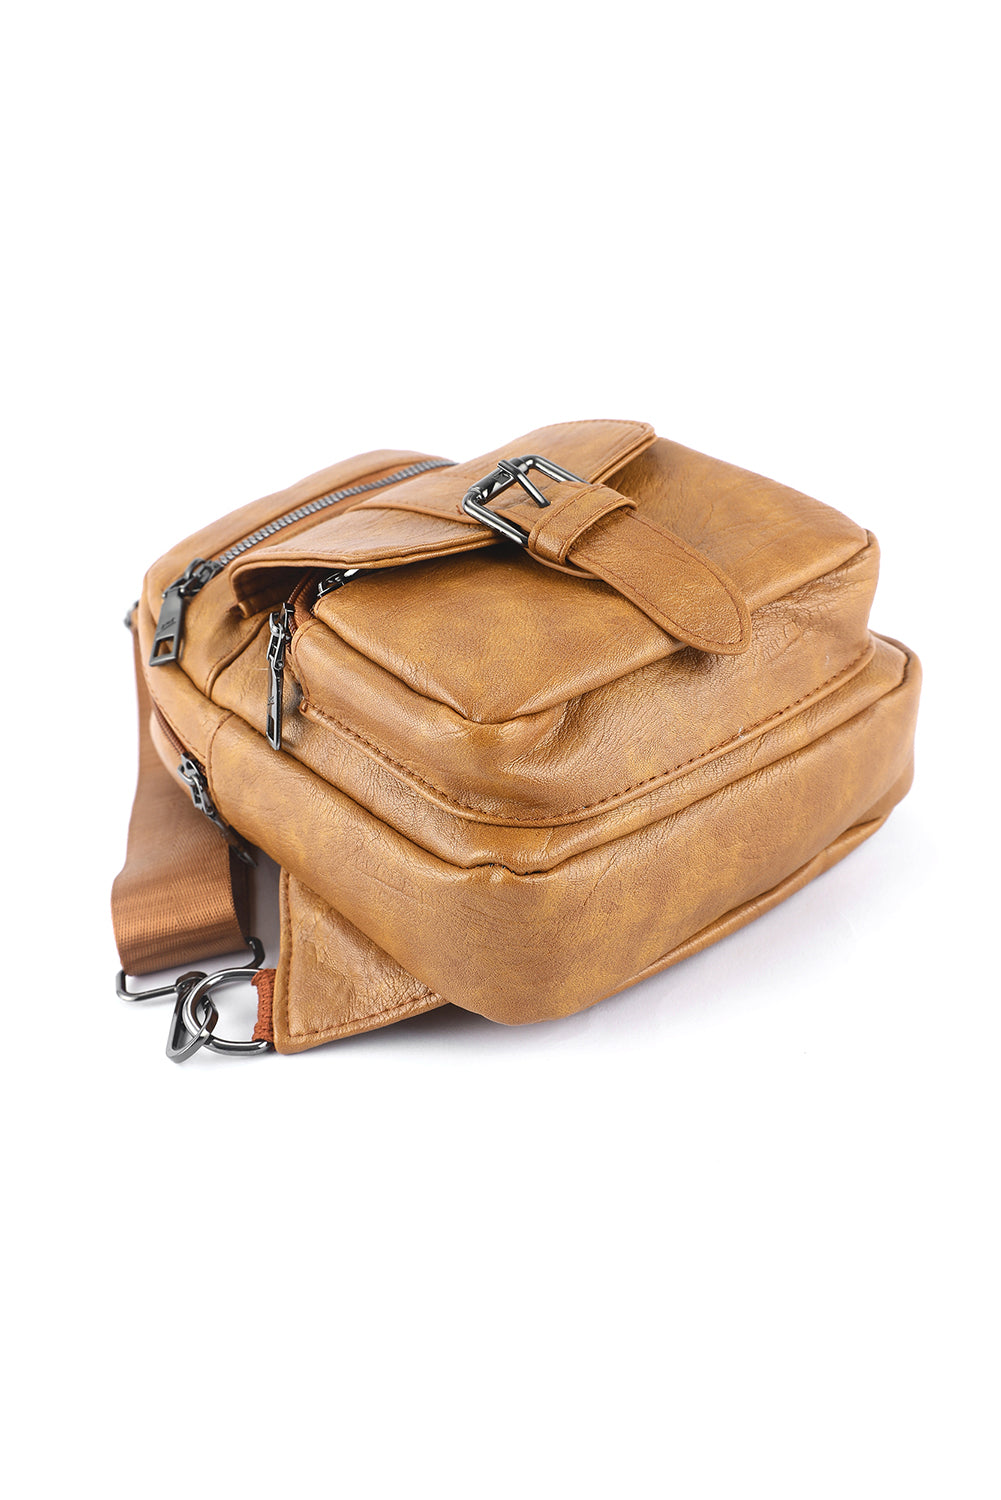 Khaki Vintage Zipper Multi Pockets Sling Bag